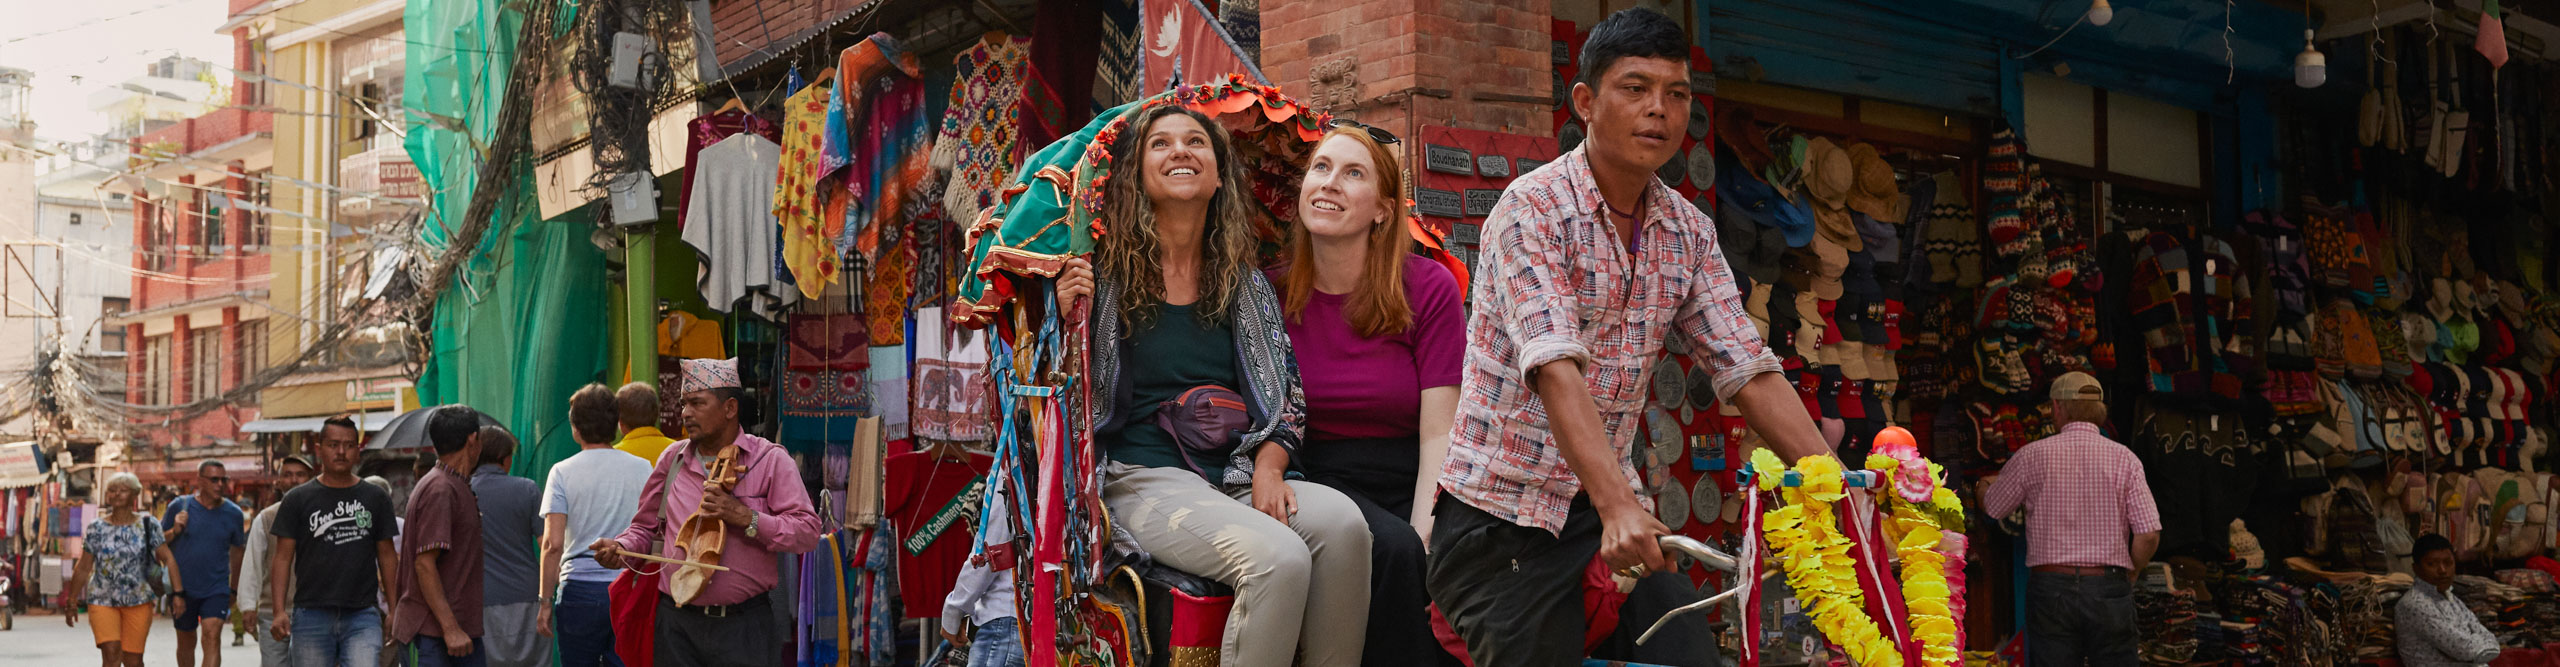 Women on tuk tuk riding through colourful busy market street in Kathmandu, Nepal 